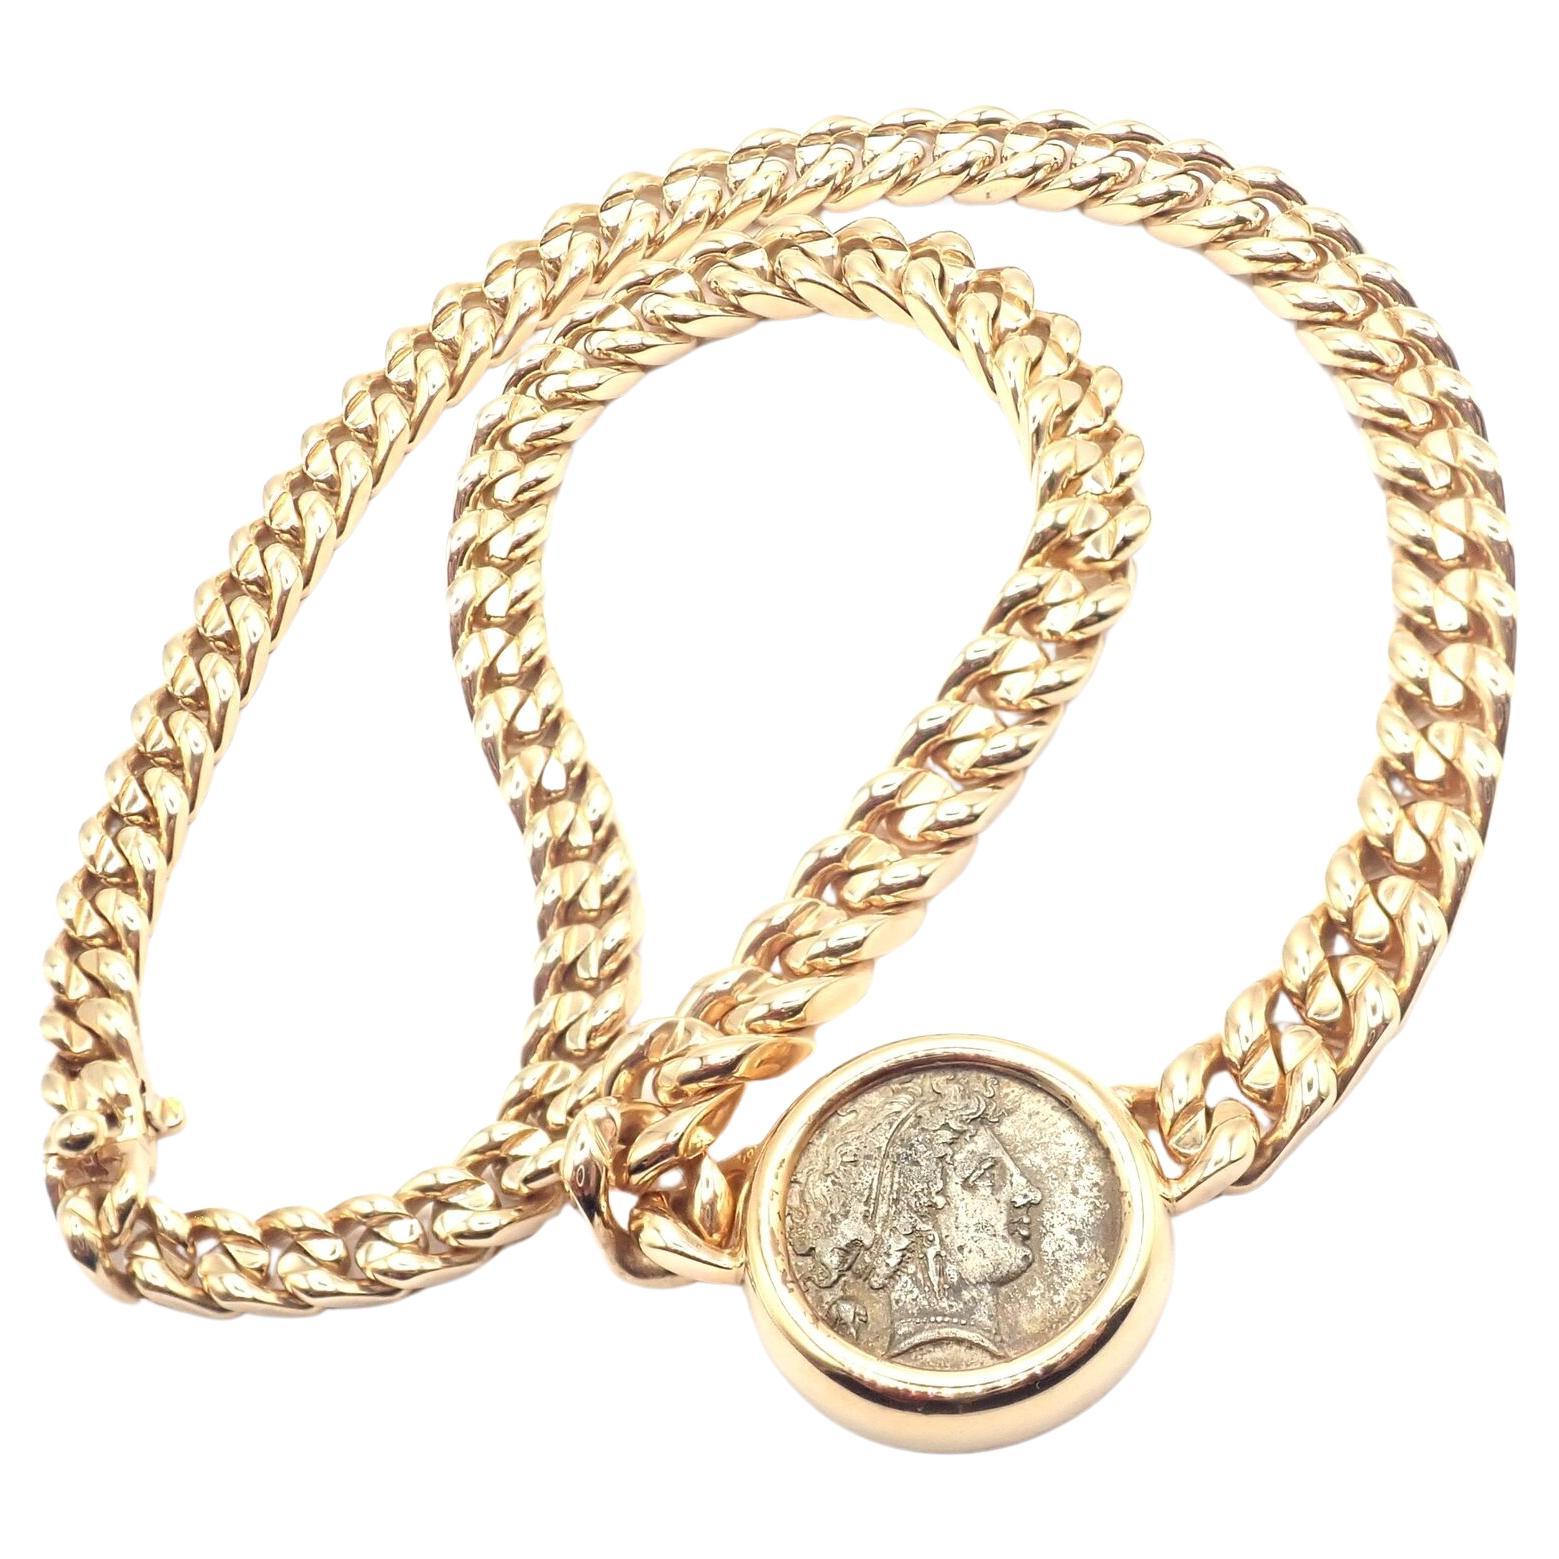 Bulgari Antique Coin Monete Yellow Gold Link Chain Necklace